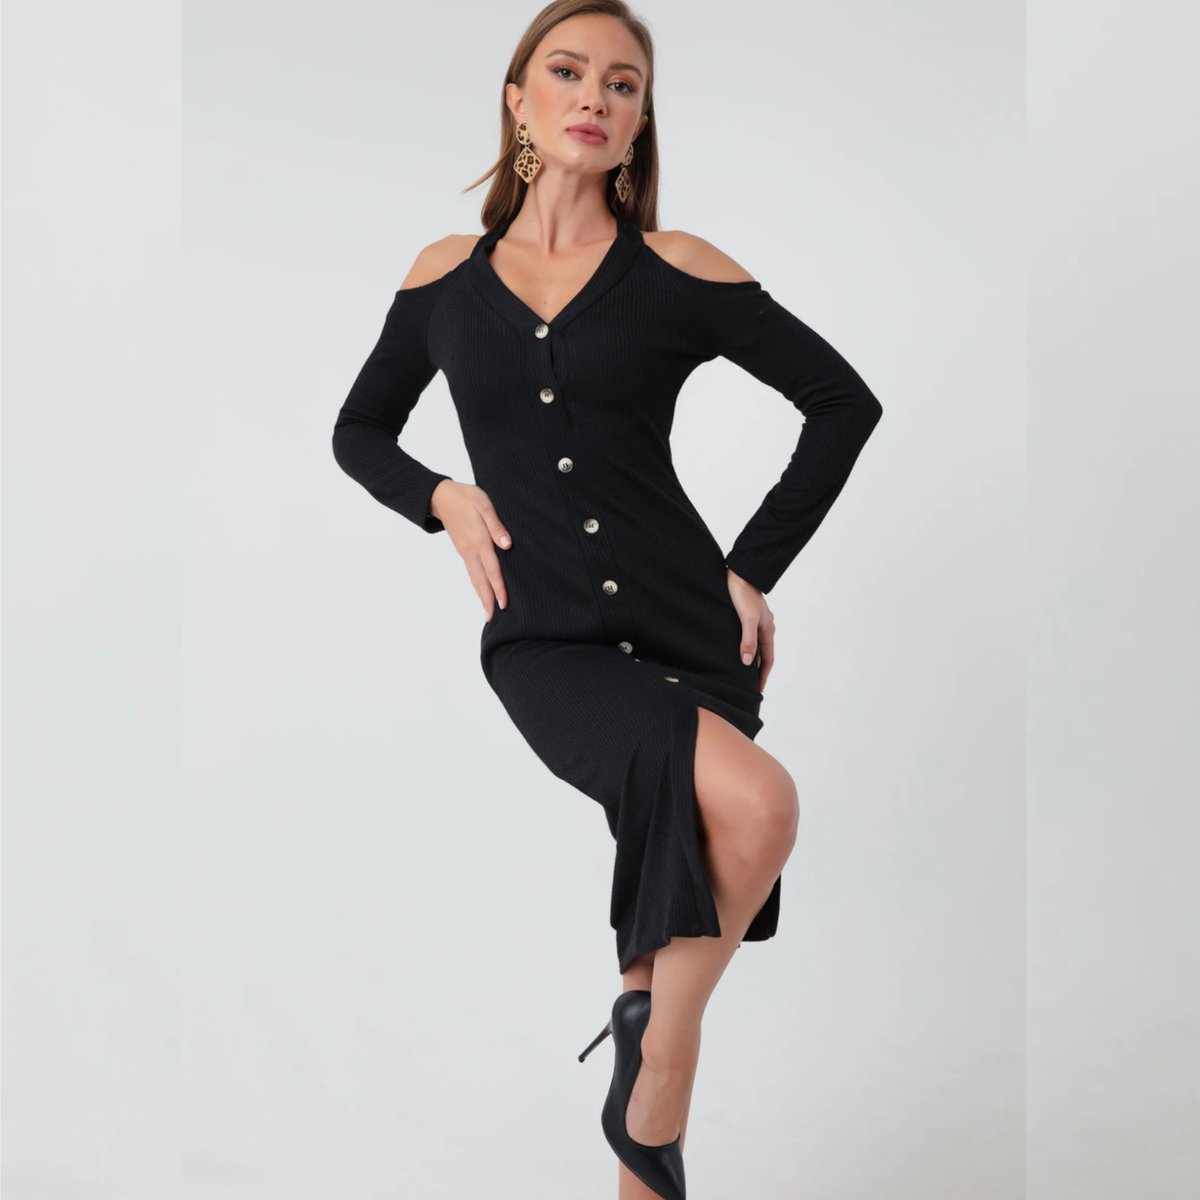 Women's Midi Sweater Dresses
😍👇
parparliboutique.etsy.com/listing/164795…
#etsy #etsyshop #knitwear #dress #clothes #mididresses #quality #cozy #sweaterdress #jumperdress #elegantstyle #winterdresses #knitteddress #casualmididress #england🇬🇧 #usa🇺🇸 #germany🇩🇪 #canada #nederland🇳🇱 #stylish